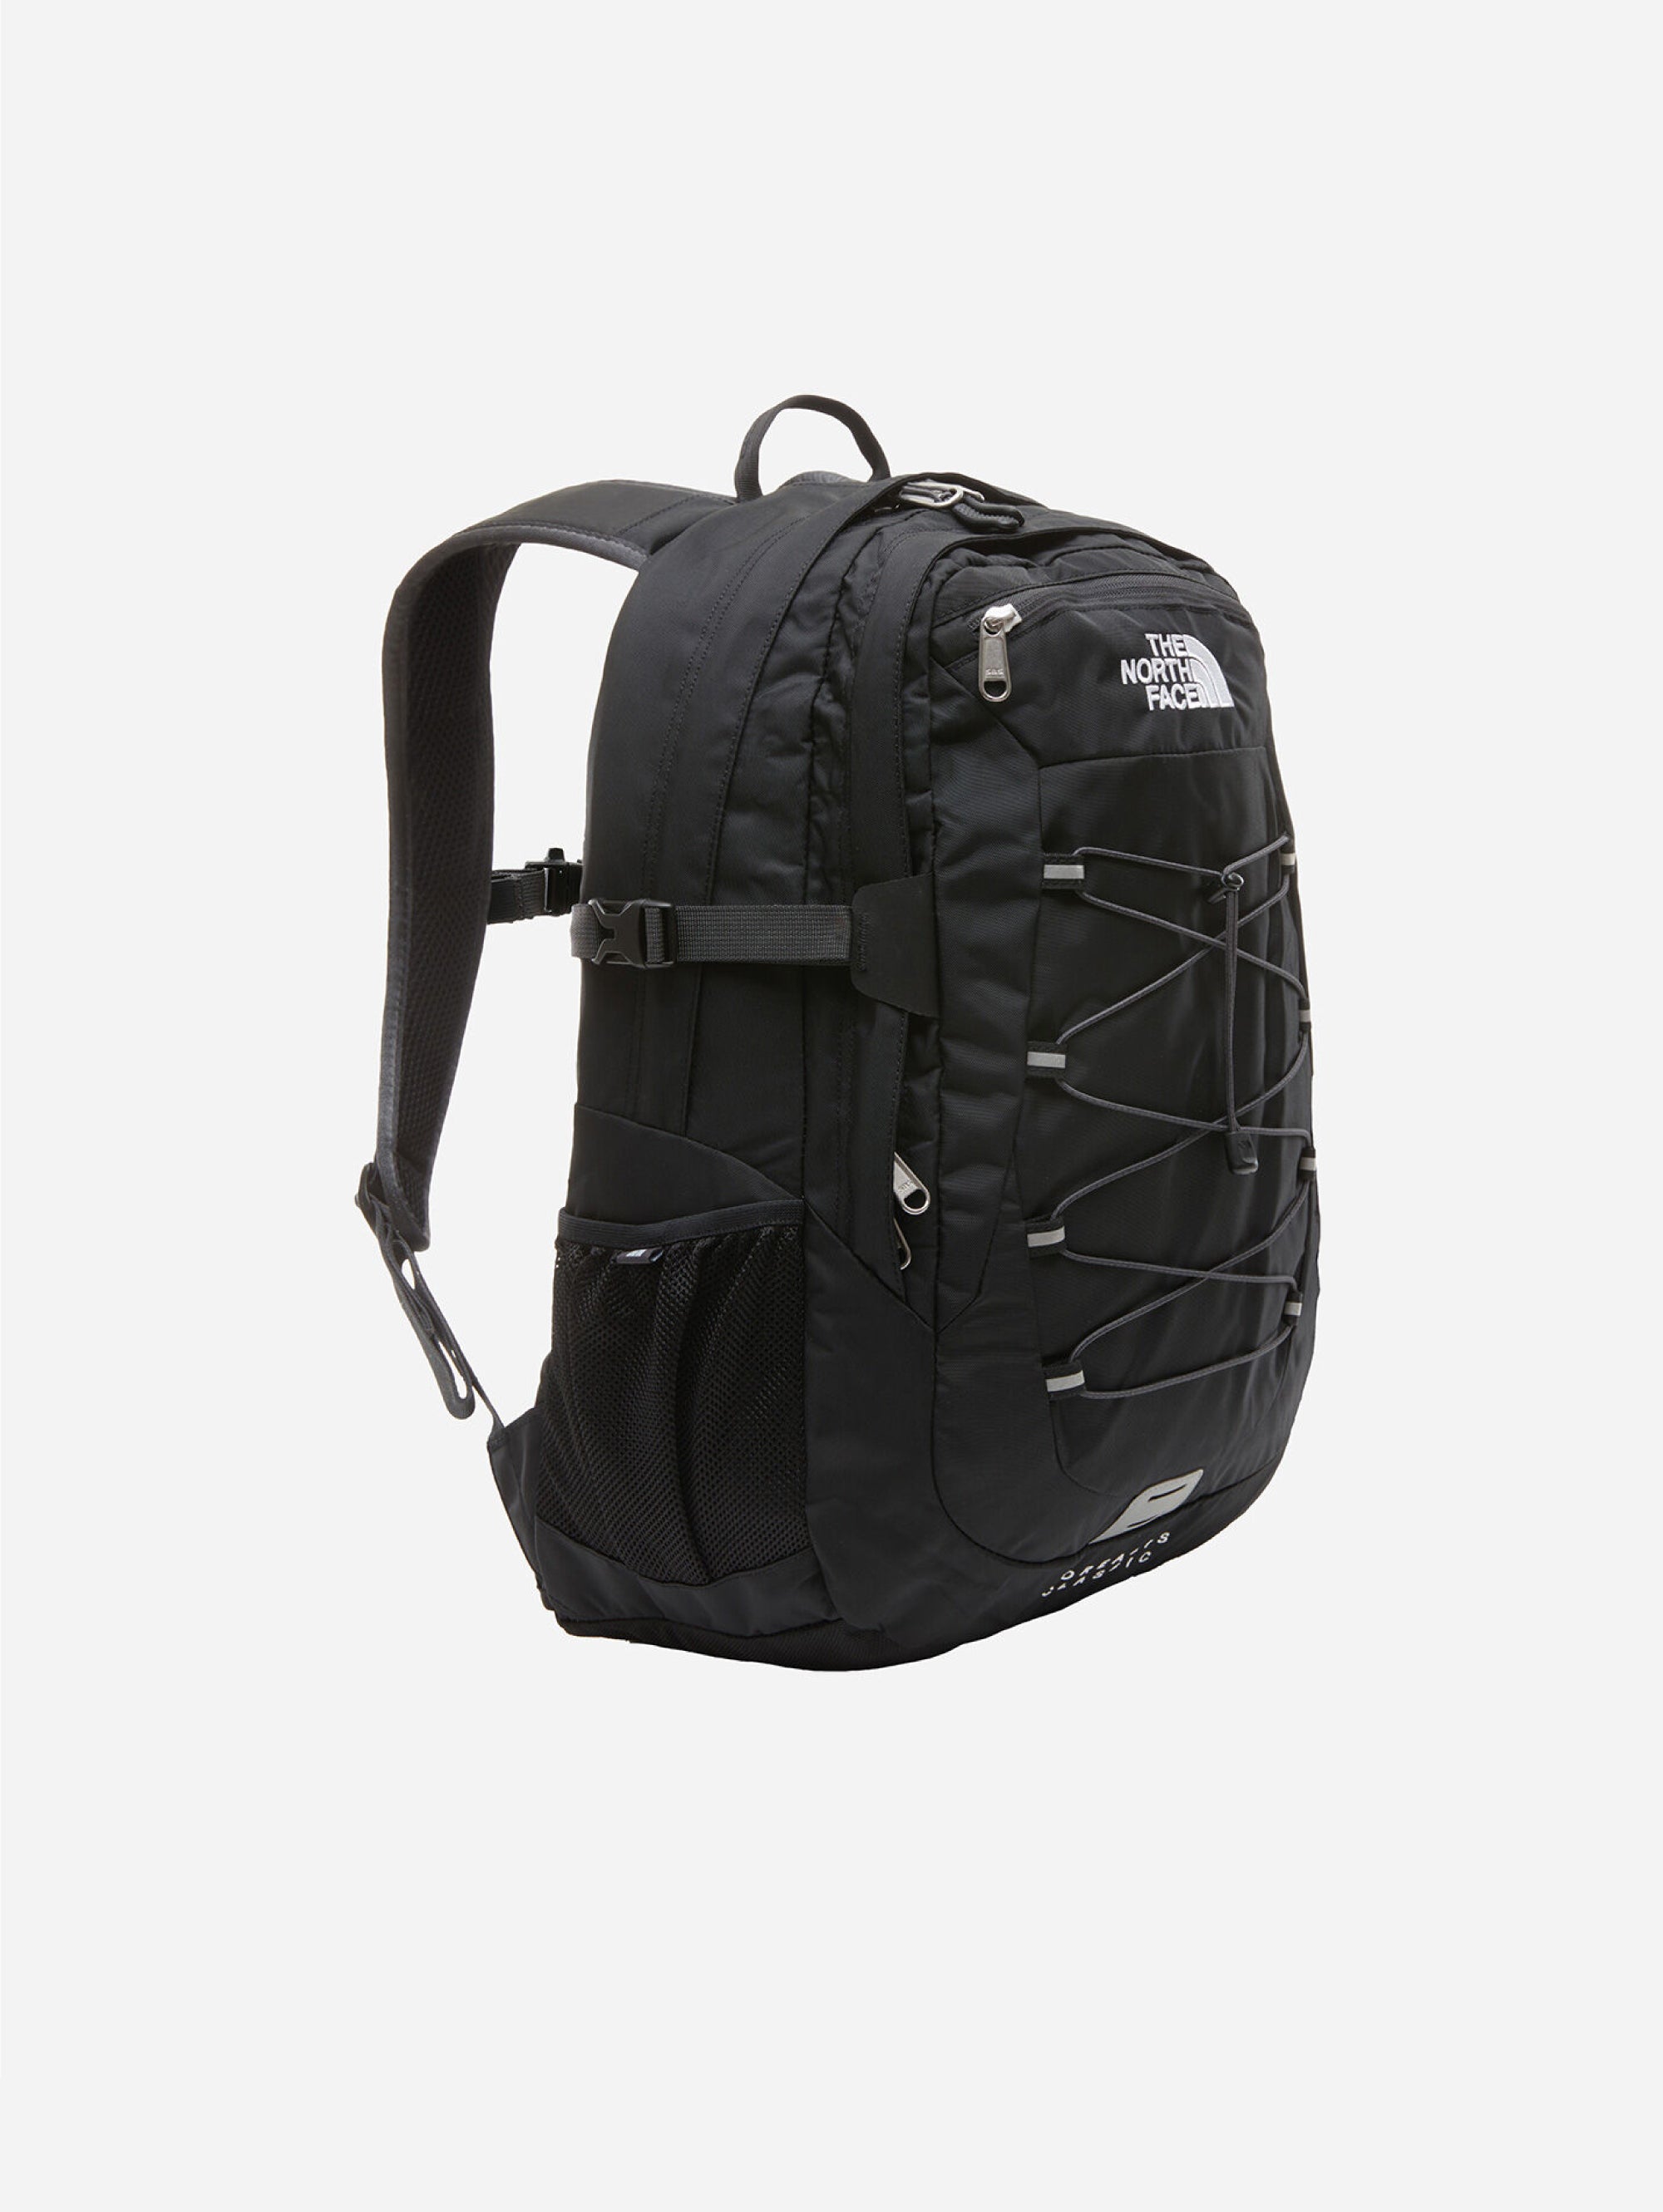 Borealis Backpack Black / Gray